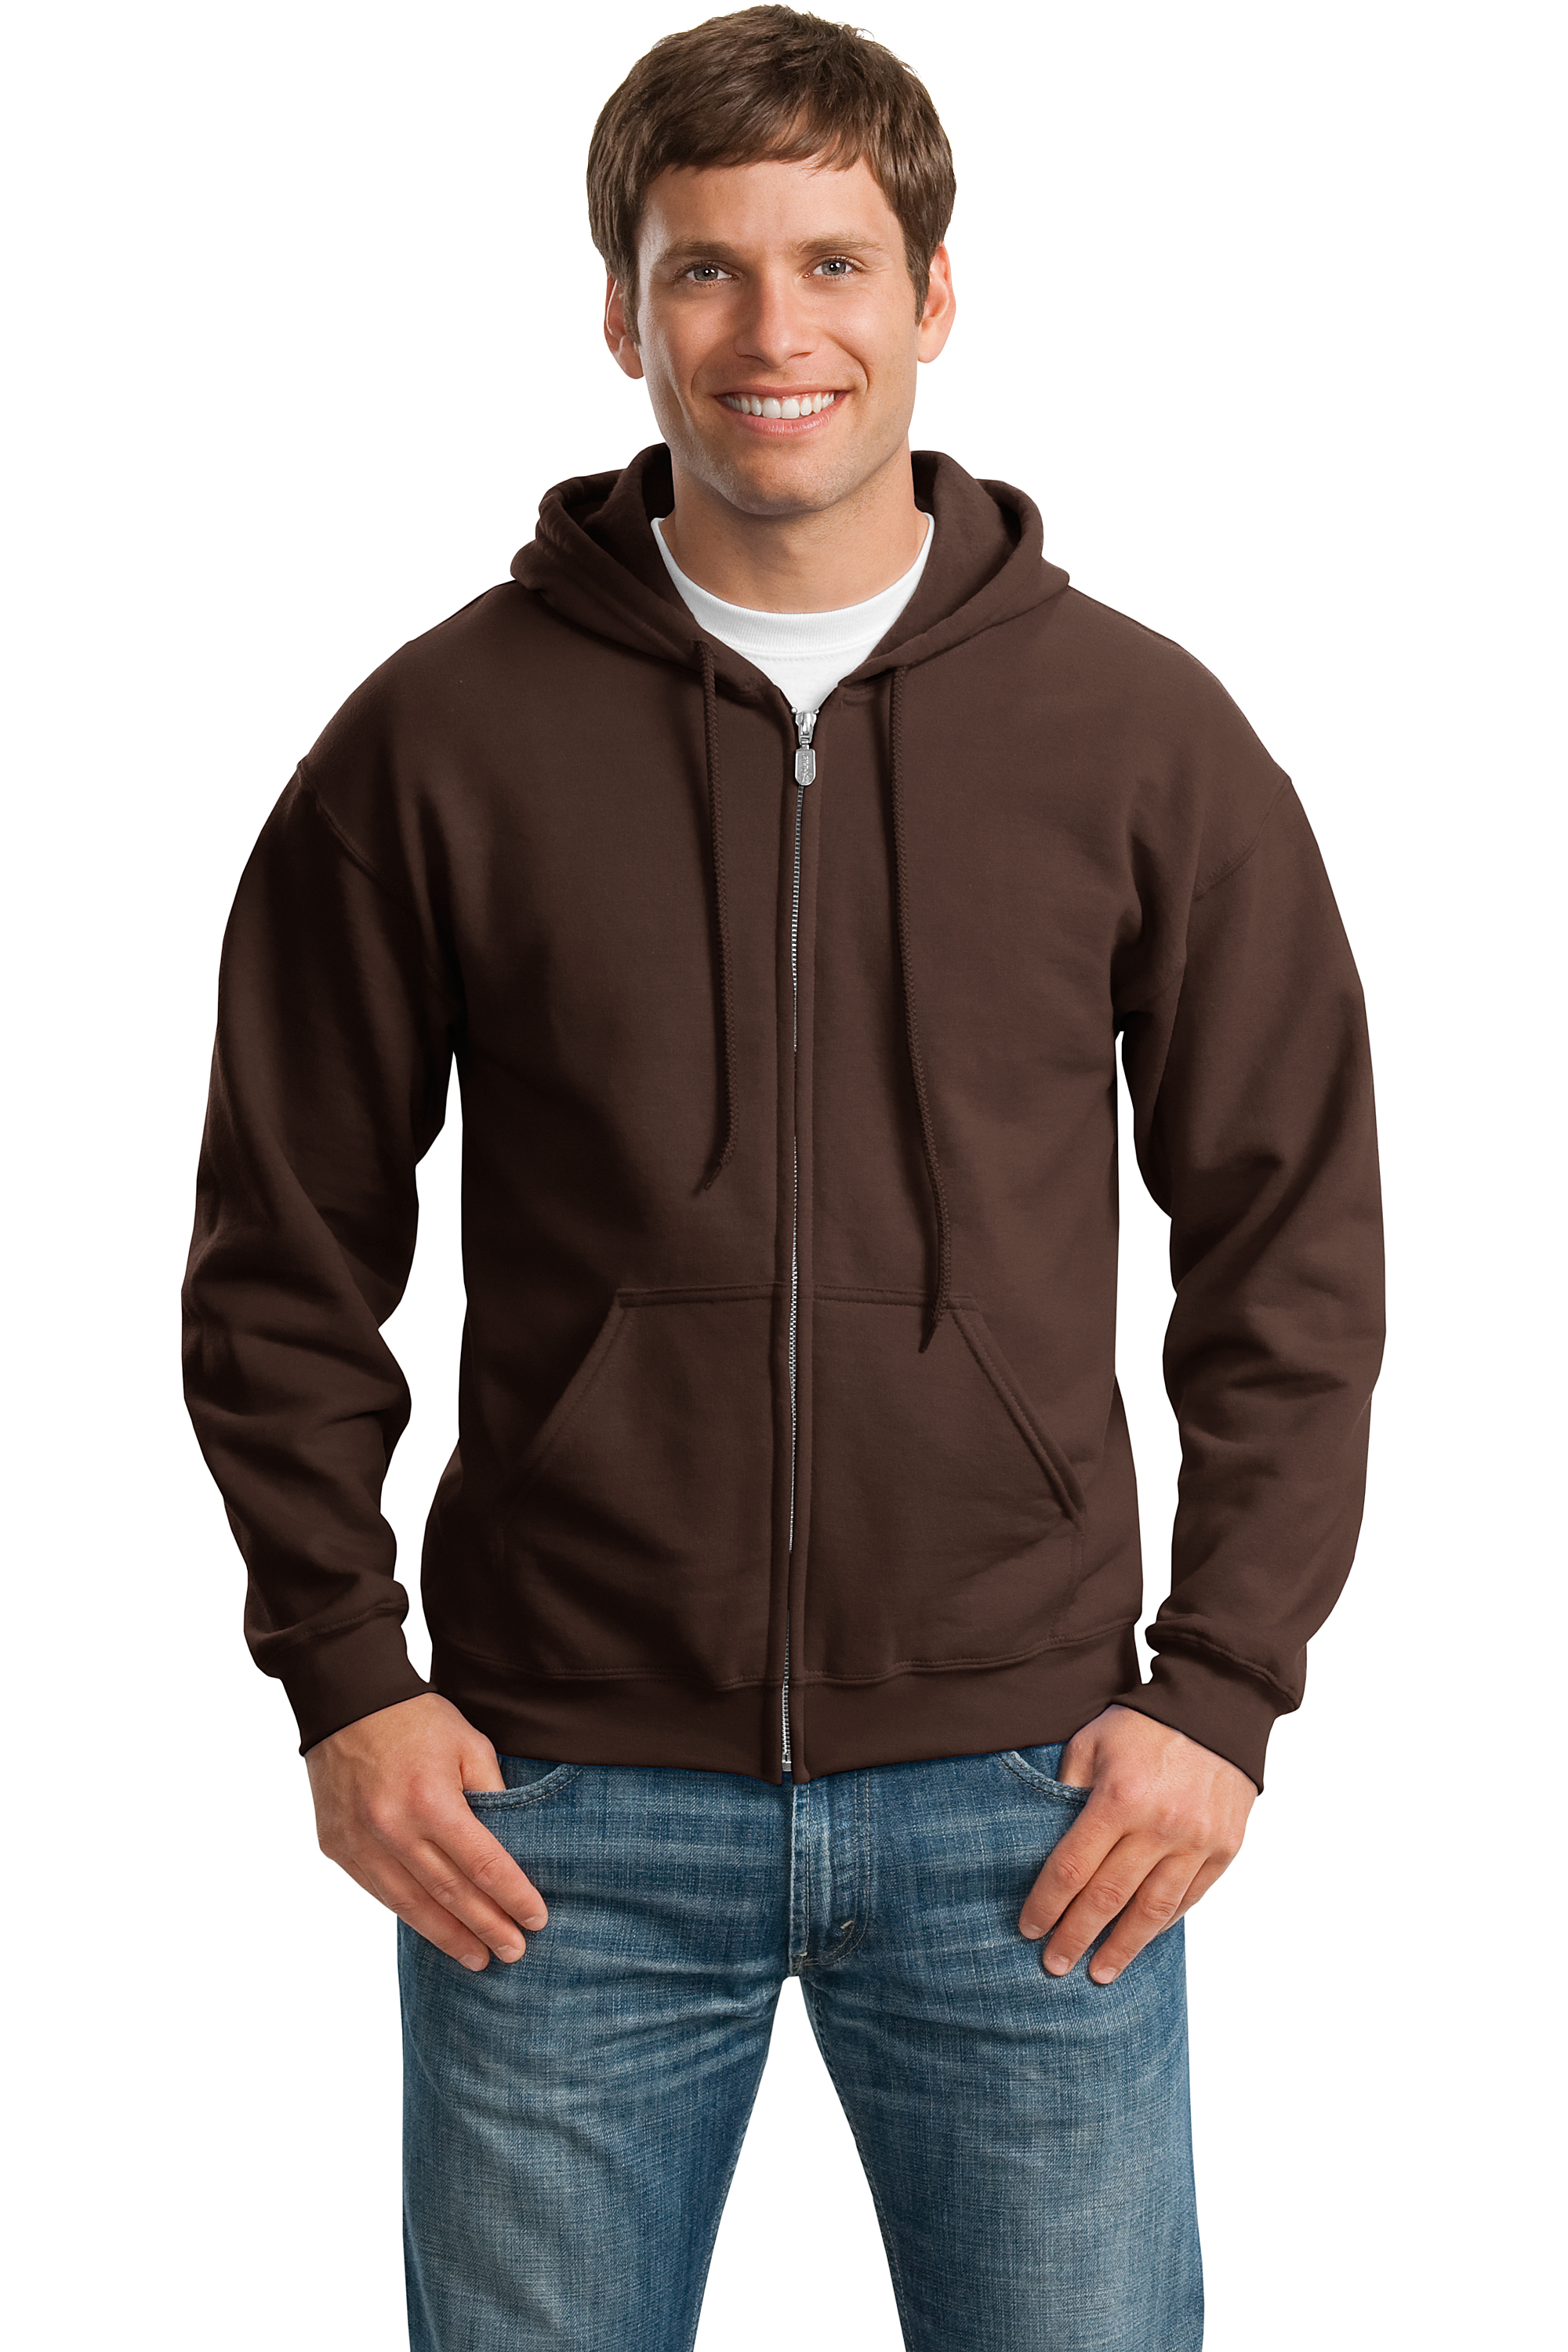 Gildan Heavy Blend Full Zip Hooded Sweatshirt